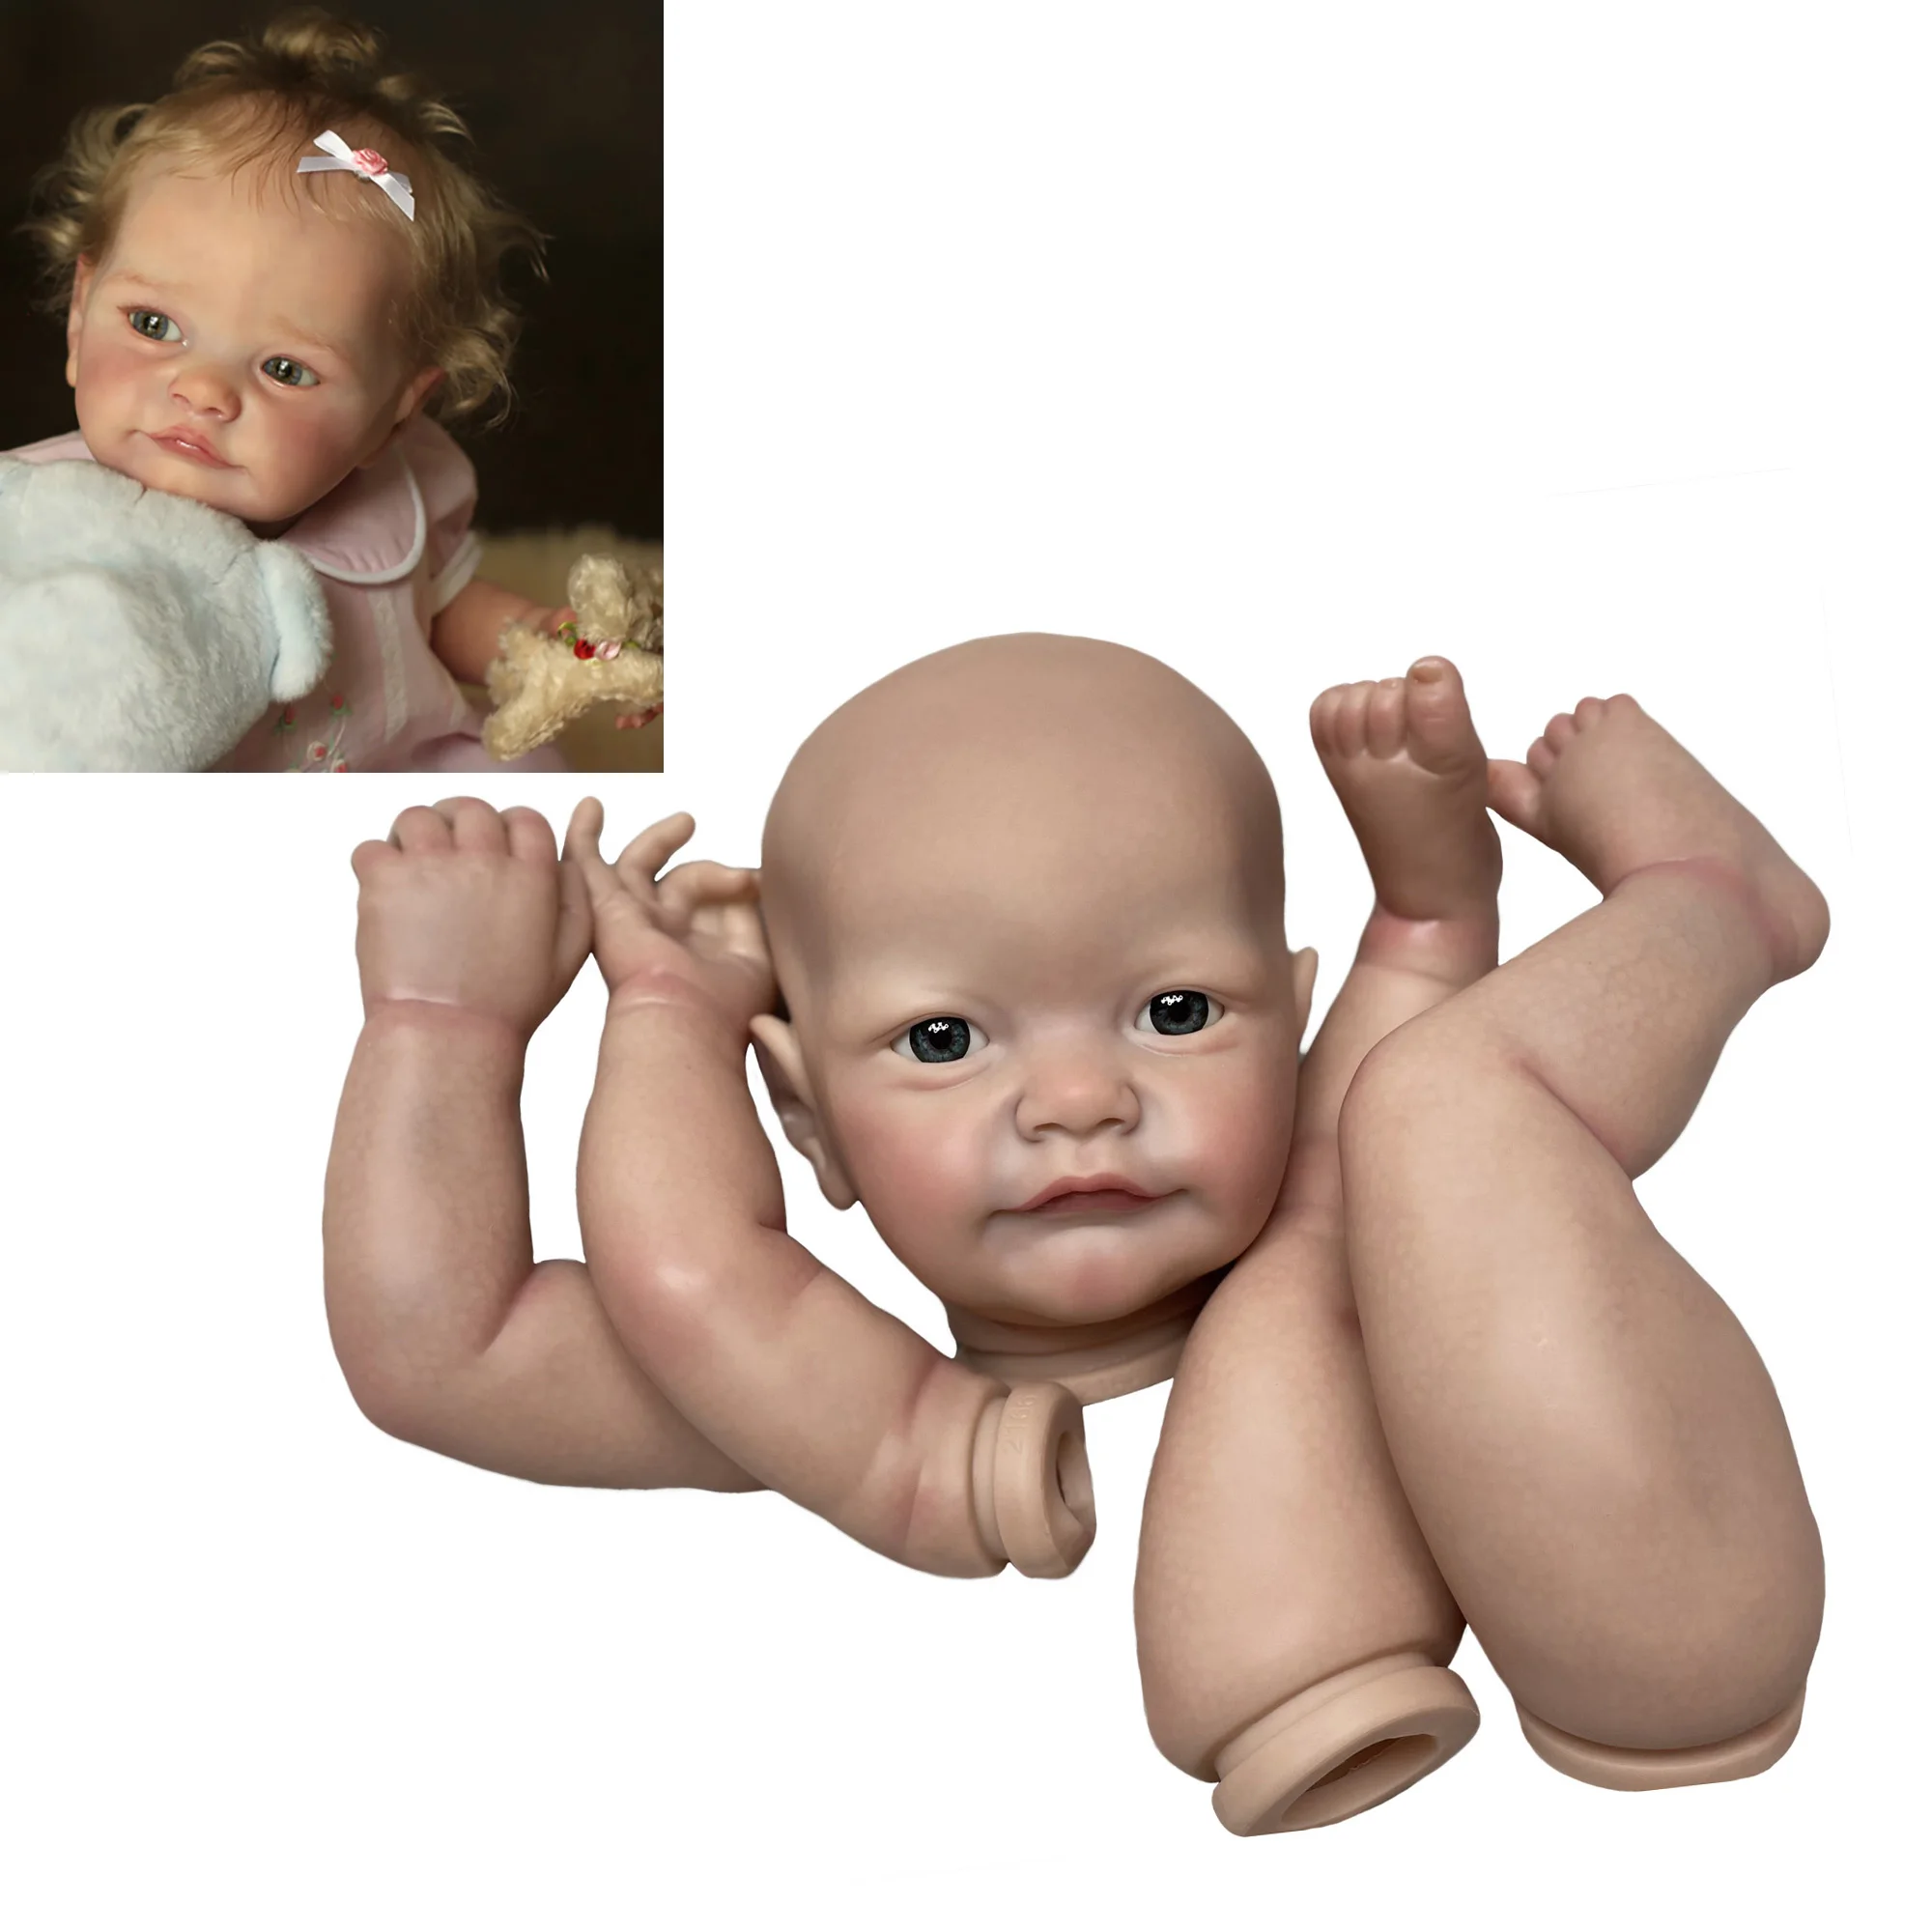 Hot Sale Boneca Bebe Reborn Комплекти Lifelike Newborn Собственоръчно Reborn Кукла Kit Include Body And Eyes бебето бон кукла оригинал